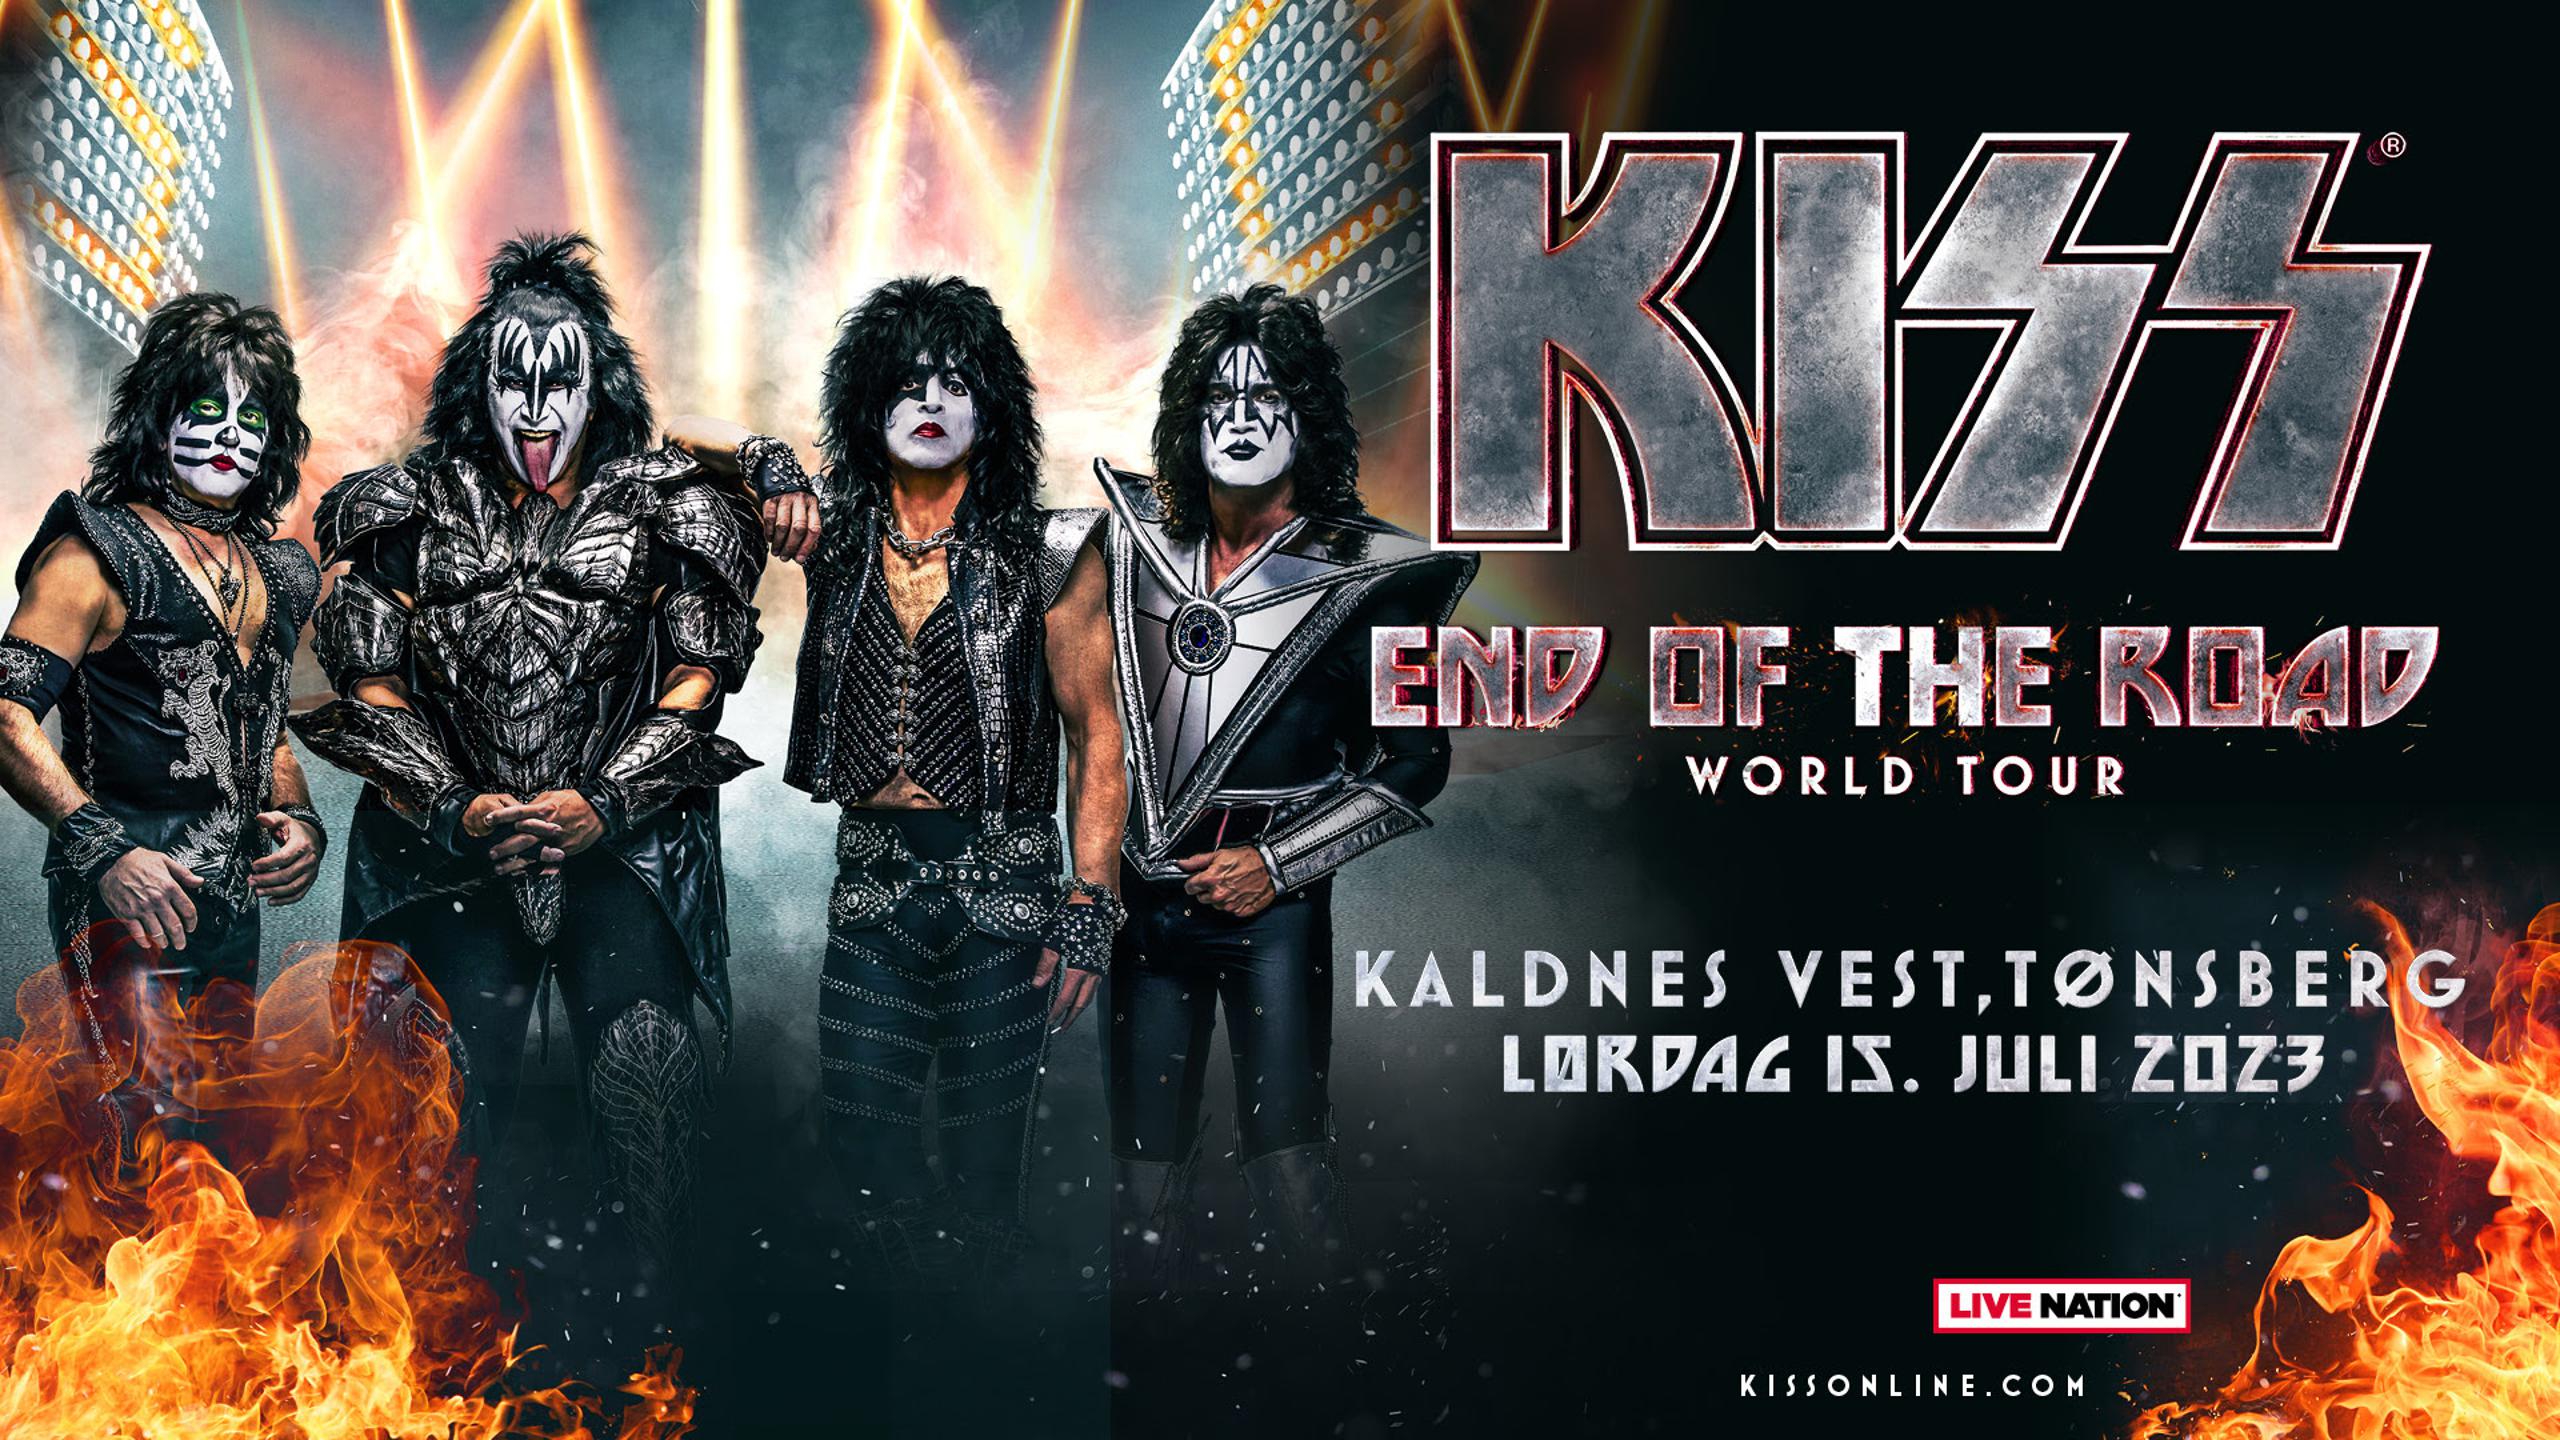 Kiss concert tickets for Kaldnes, Tønsberg Saturday, 15 July 2023